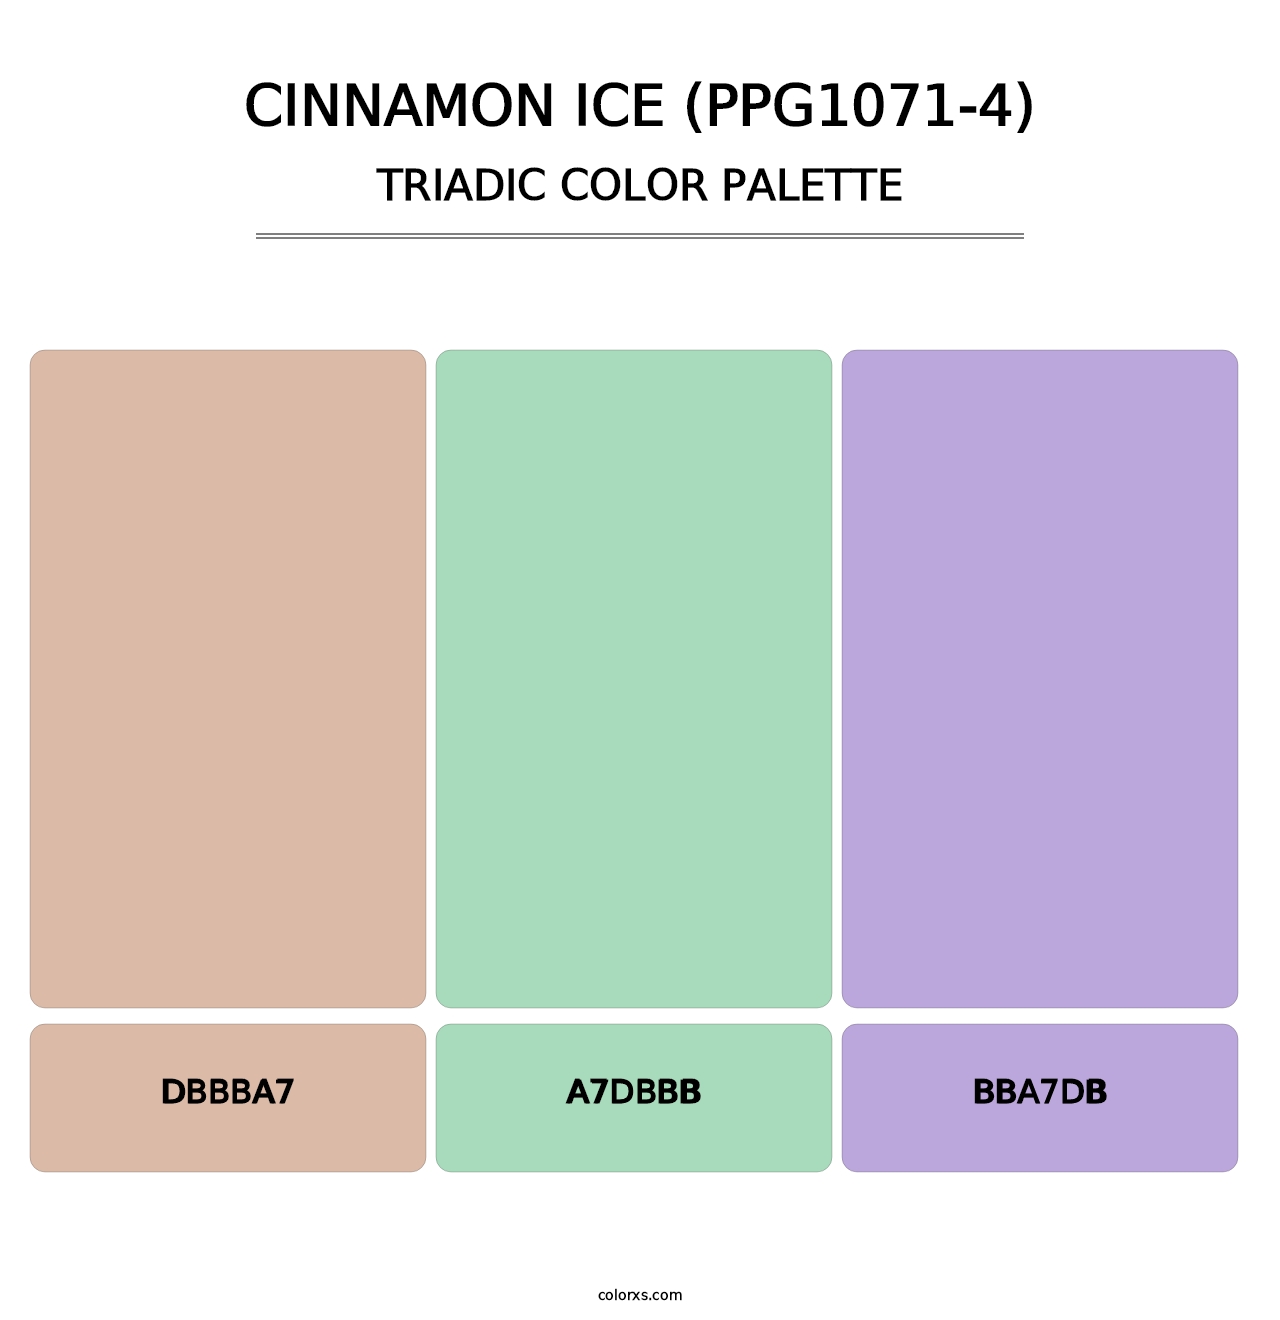 Cinnamon Ice (PPG1071-4) - Triadic Color Palette